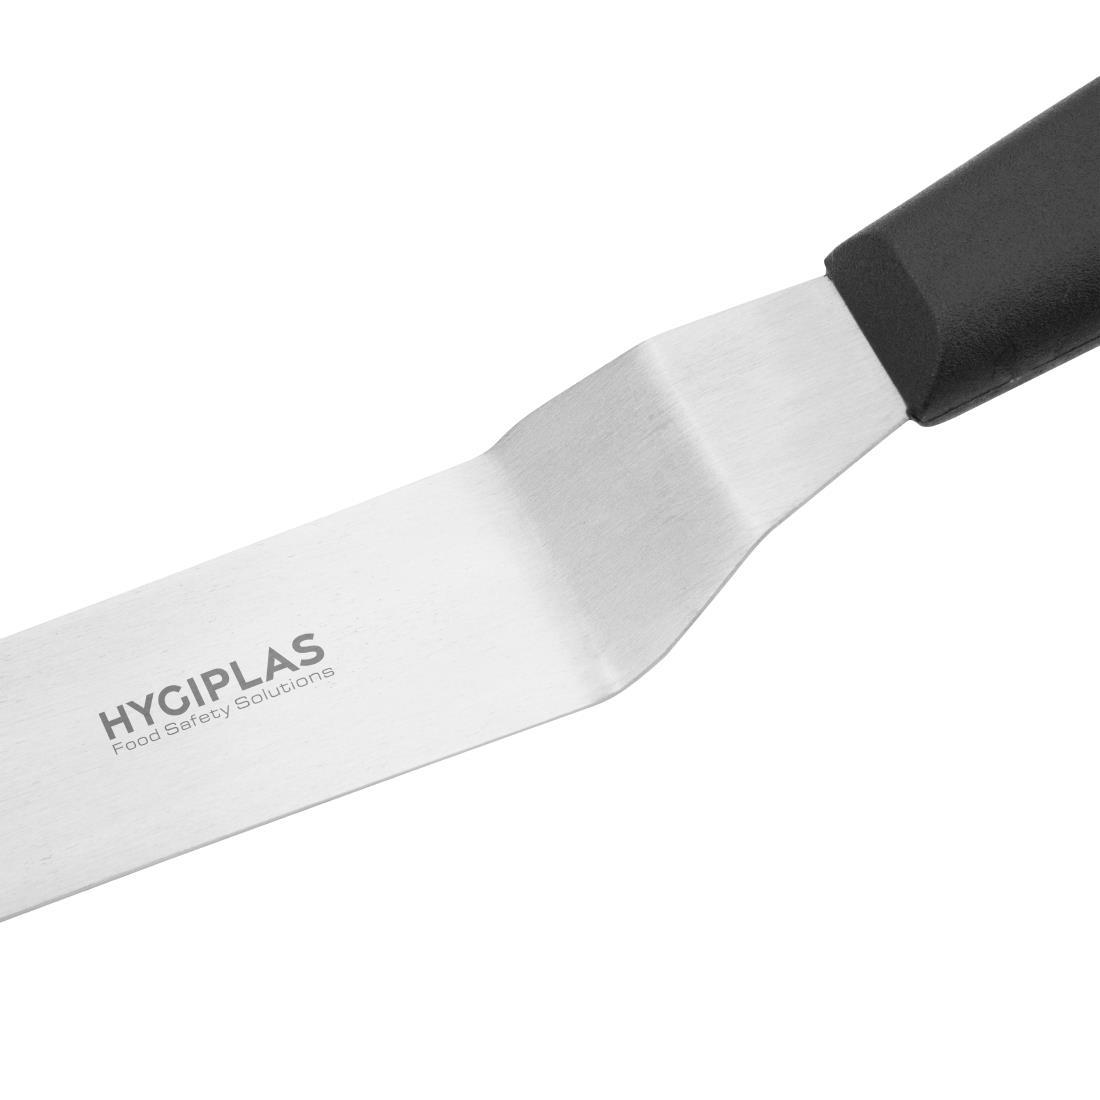 Hygiplas Angled Blade Palette Knife Black 10cm - D420  - 3